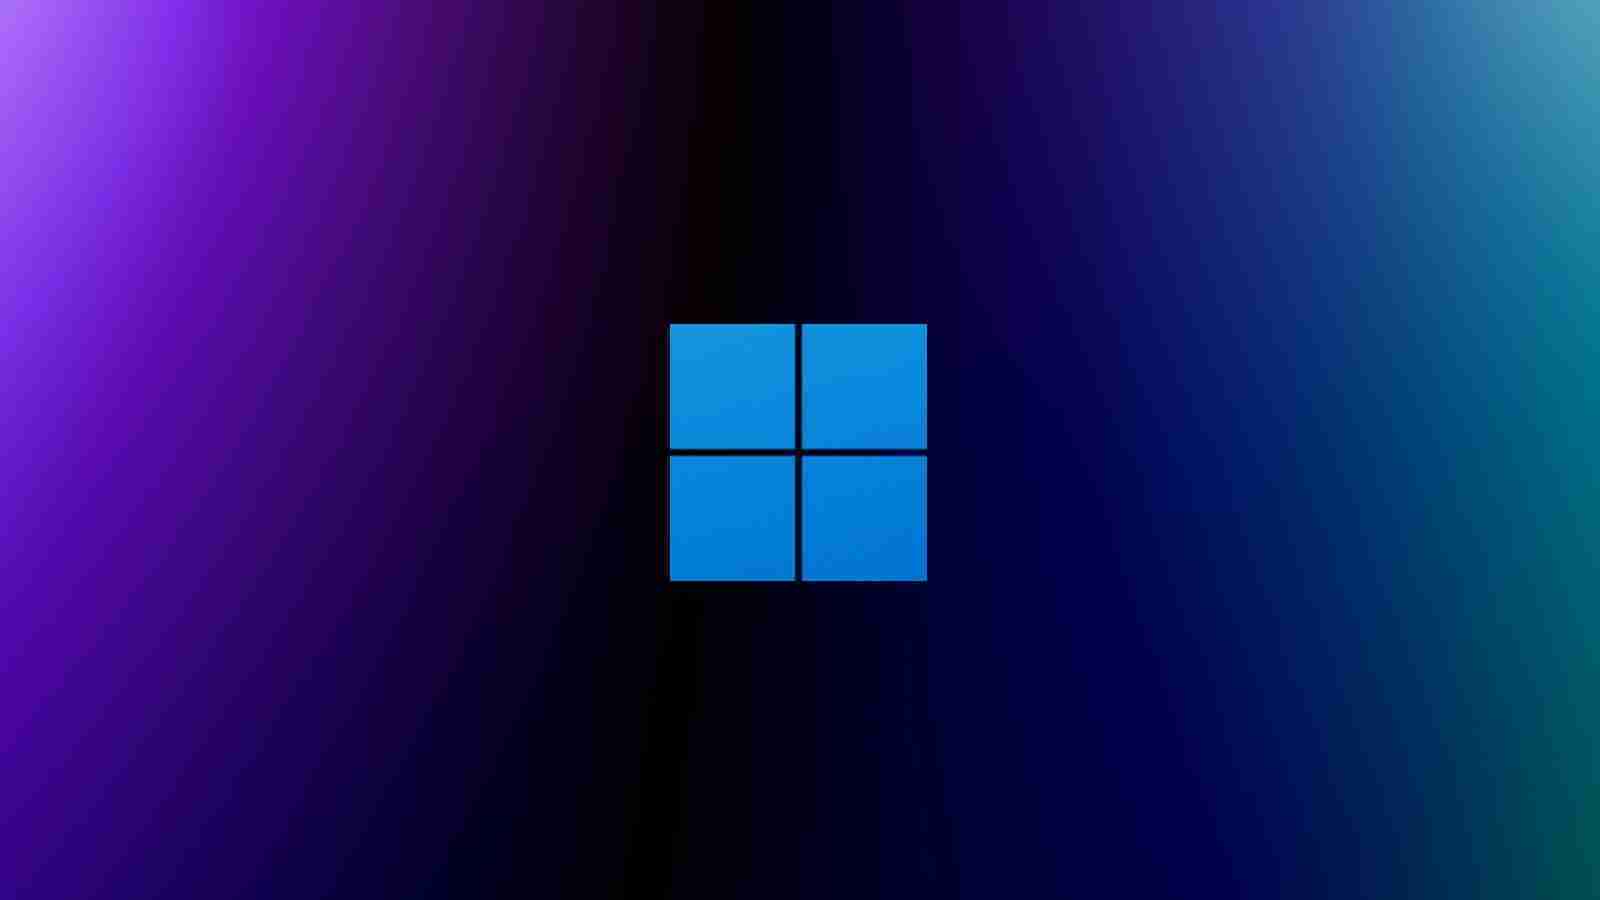 windows 11 download dev